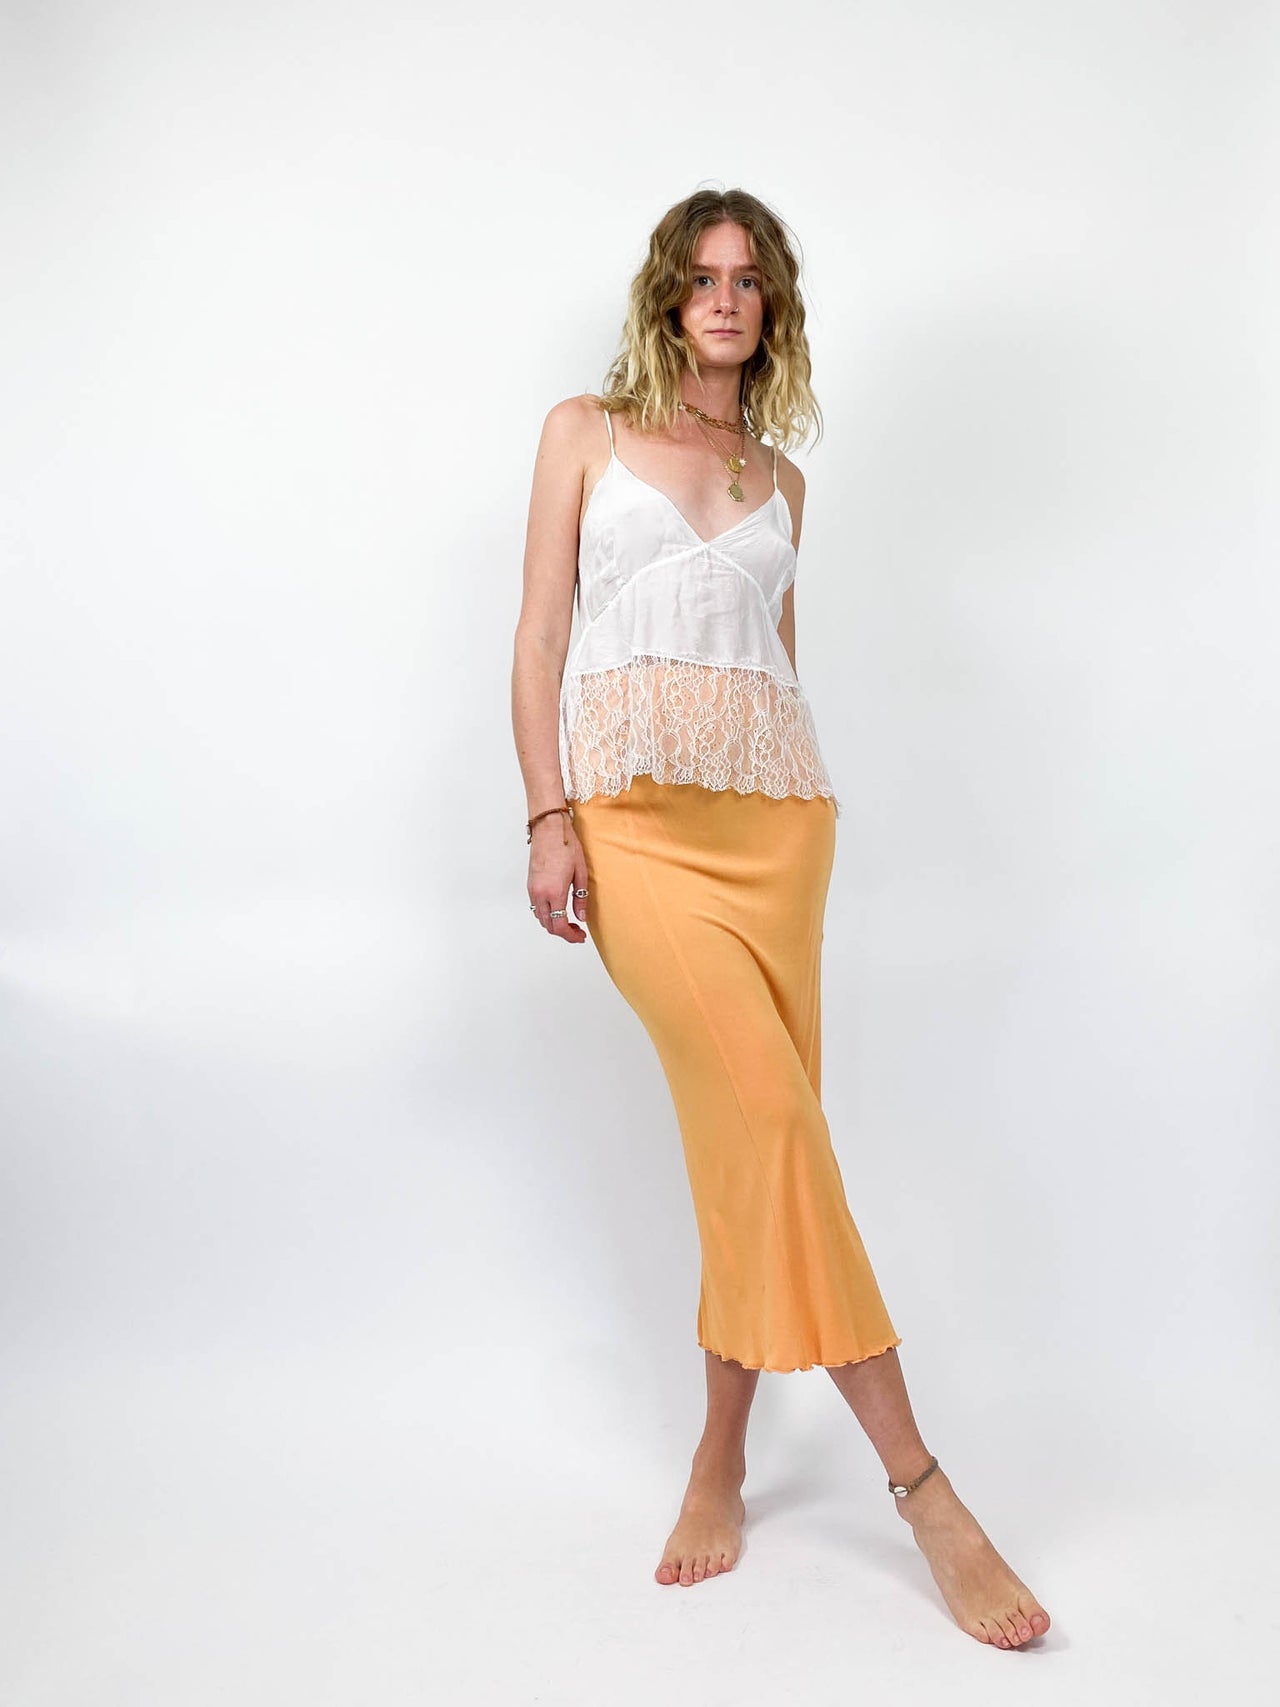 Tangerine Orange Midi Skirt (XS/S)